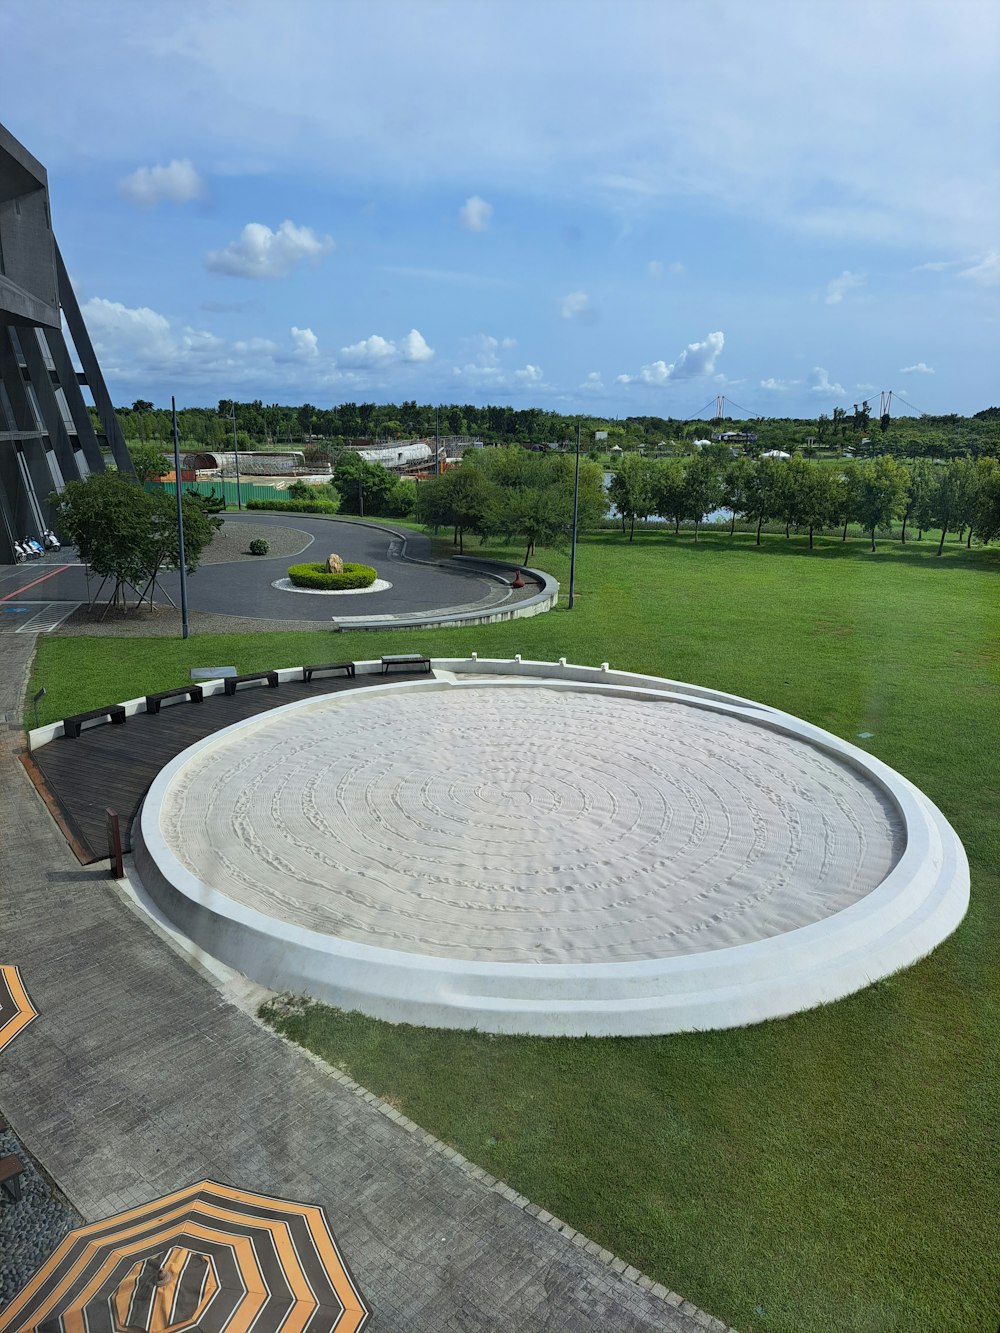 a circular park with a circular hole